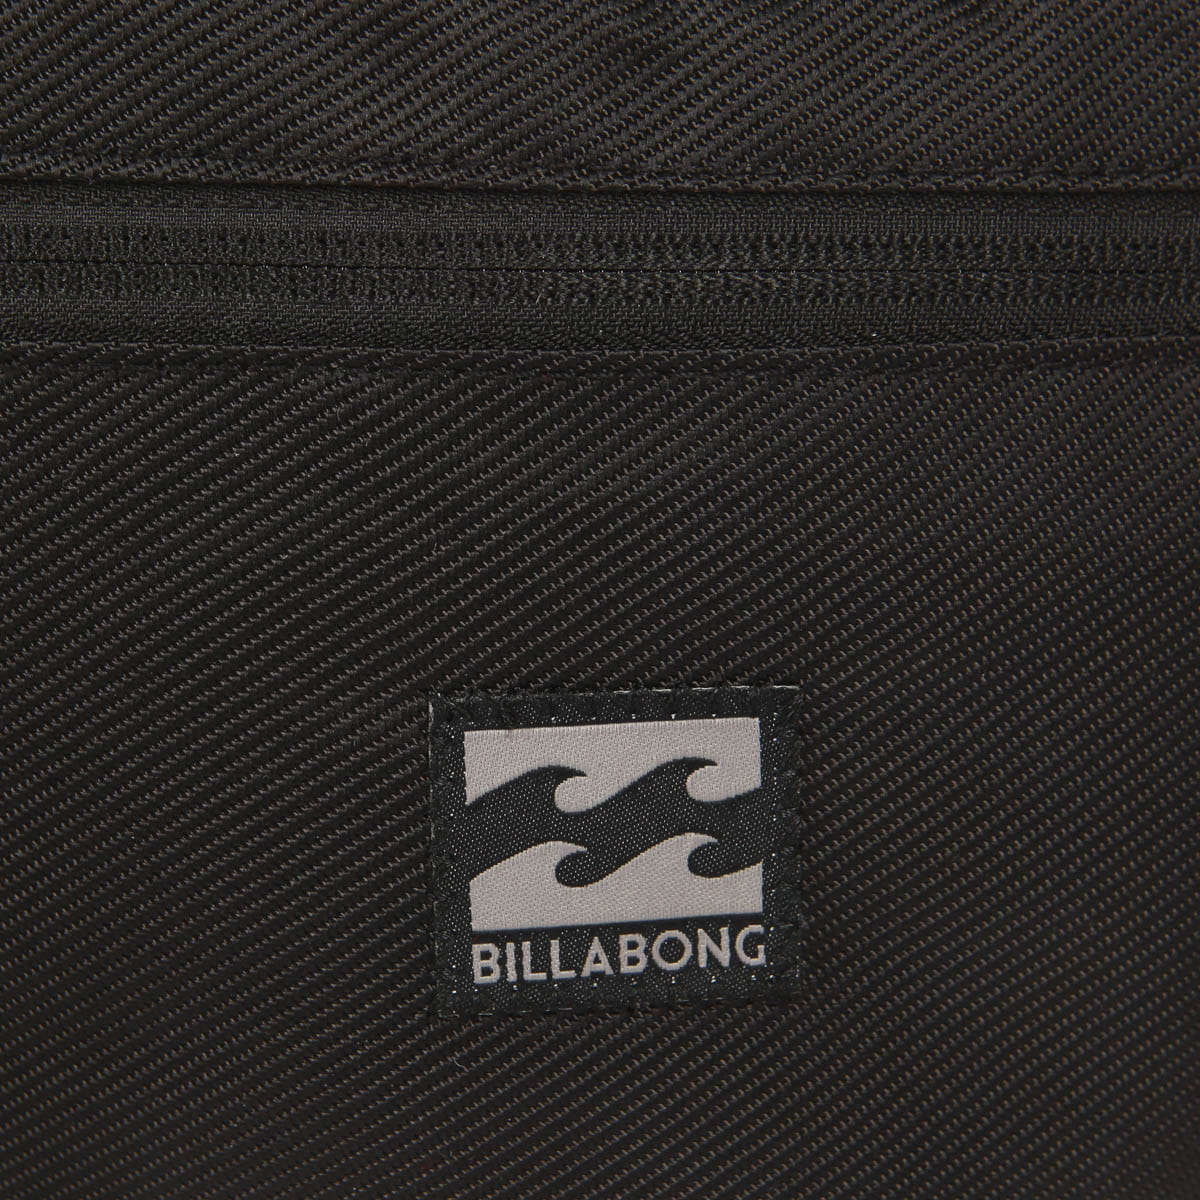 Сумка поясная Billabong. Billabong сумка мужская. Billabong Bali Waistpack. Java сумка. Accesssale140422 element